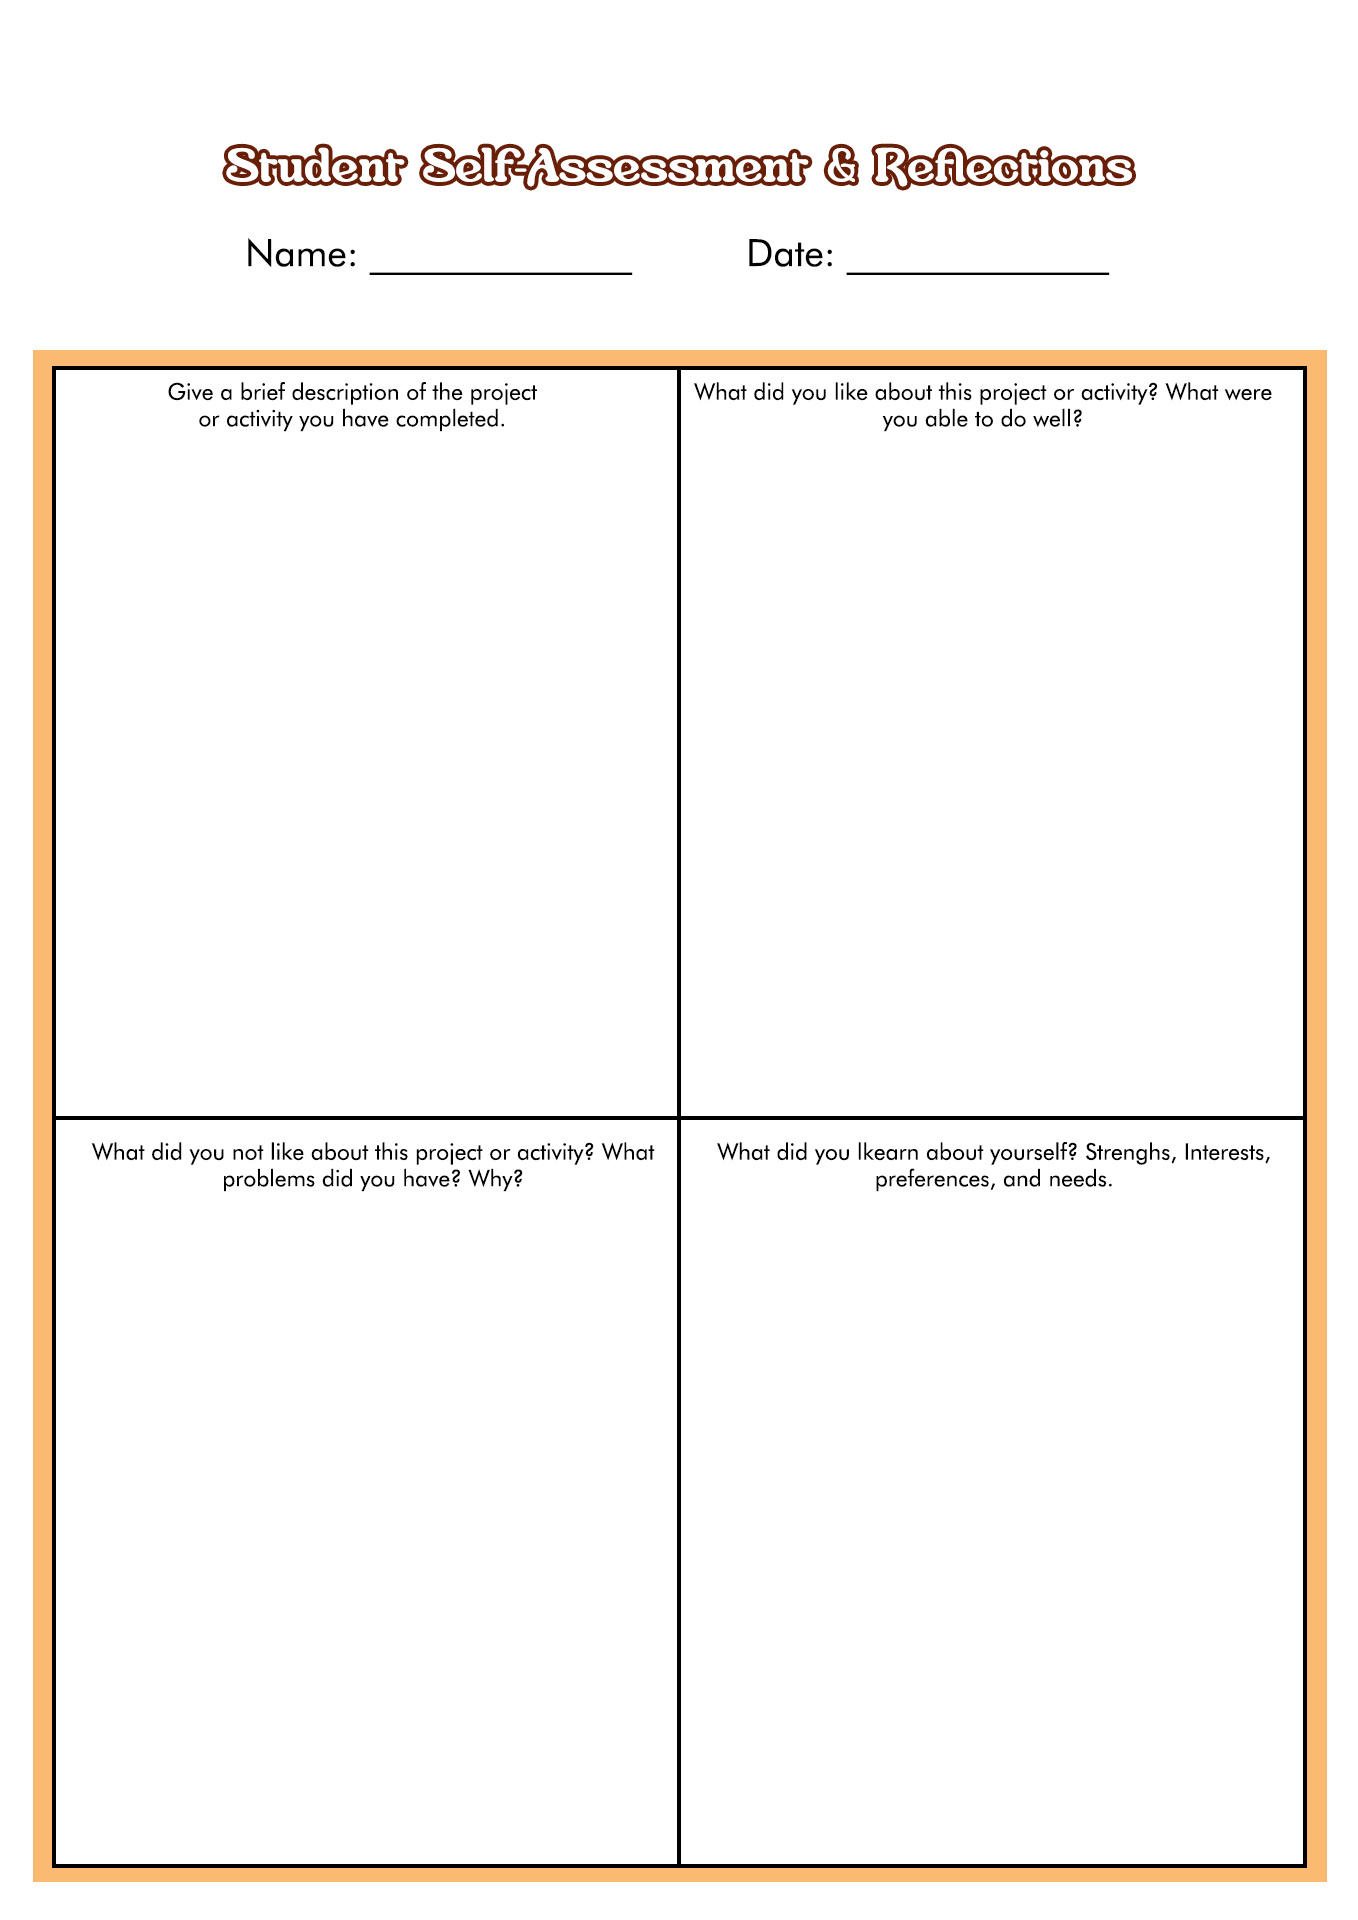 Personal Self-Assessment Worksheets Image